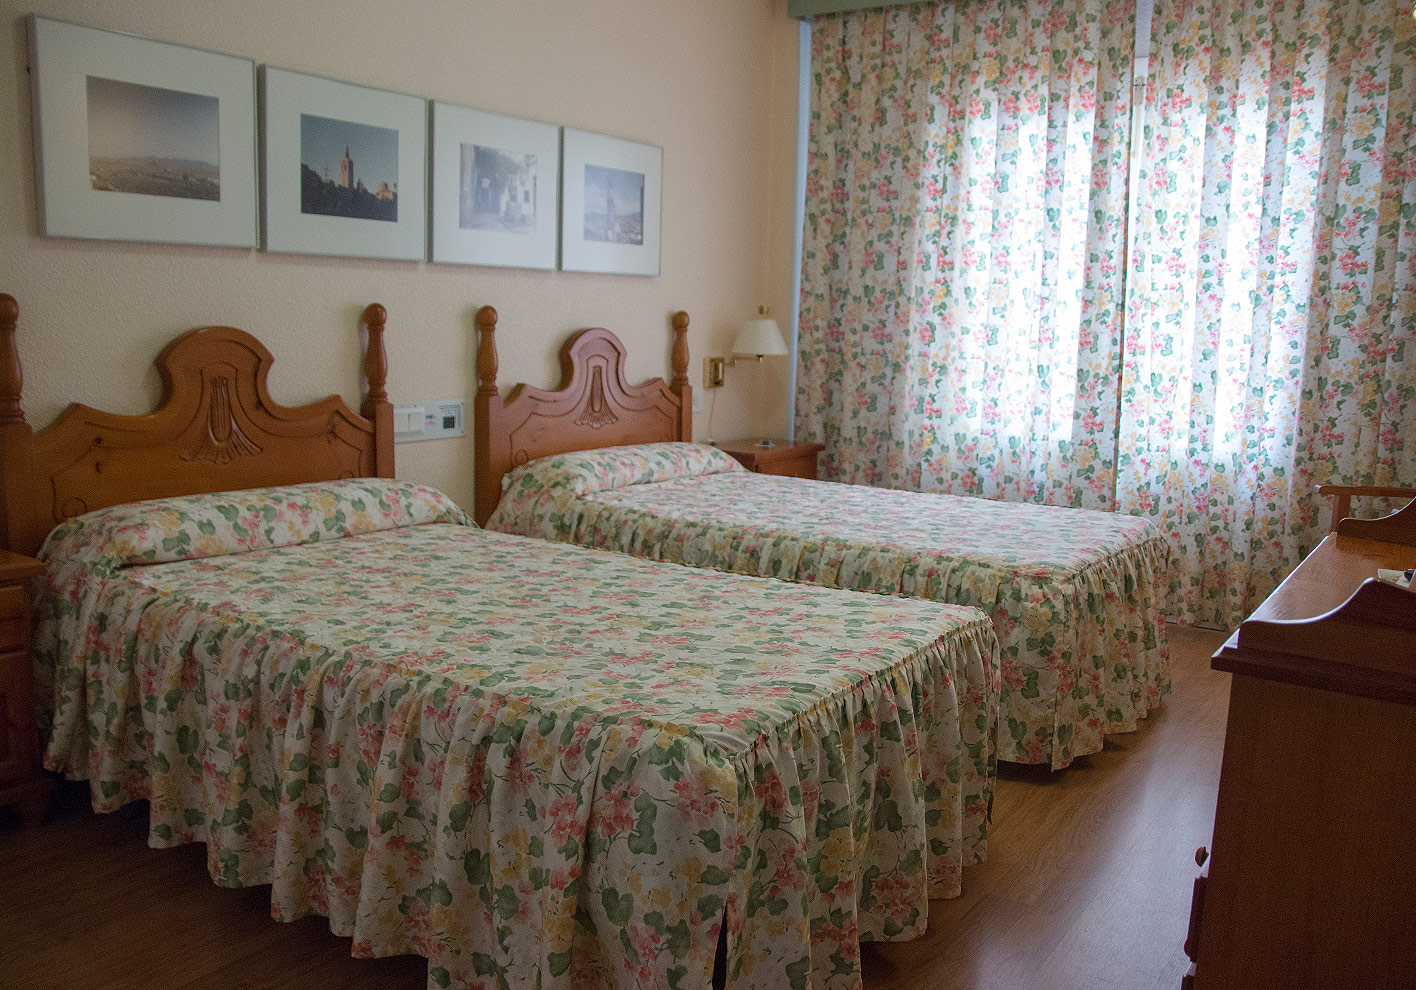 Separate Beds Room at Hotel Restaurante Terraza Carmona in Vera, Almeria